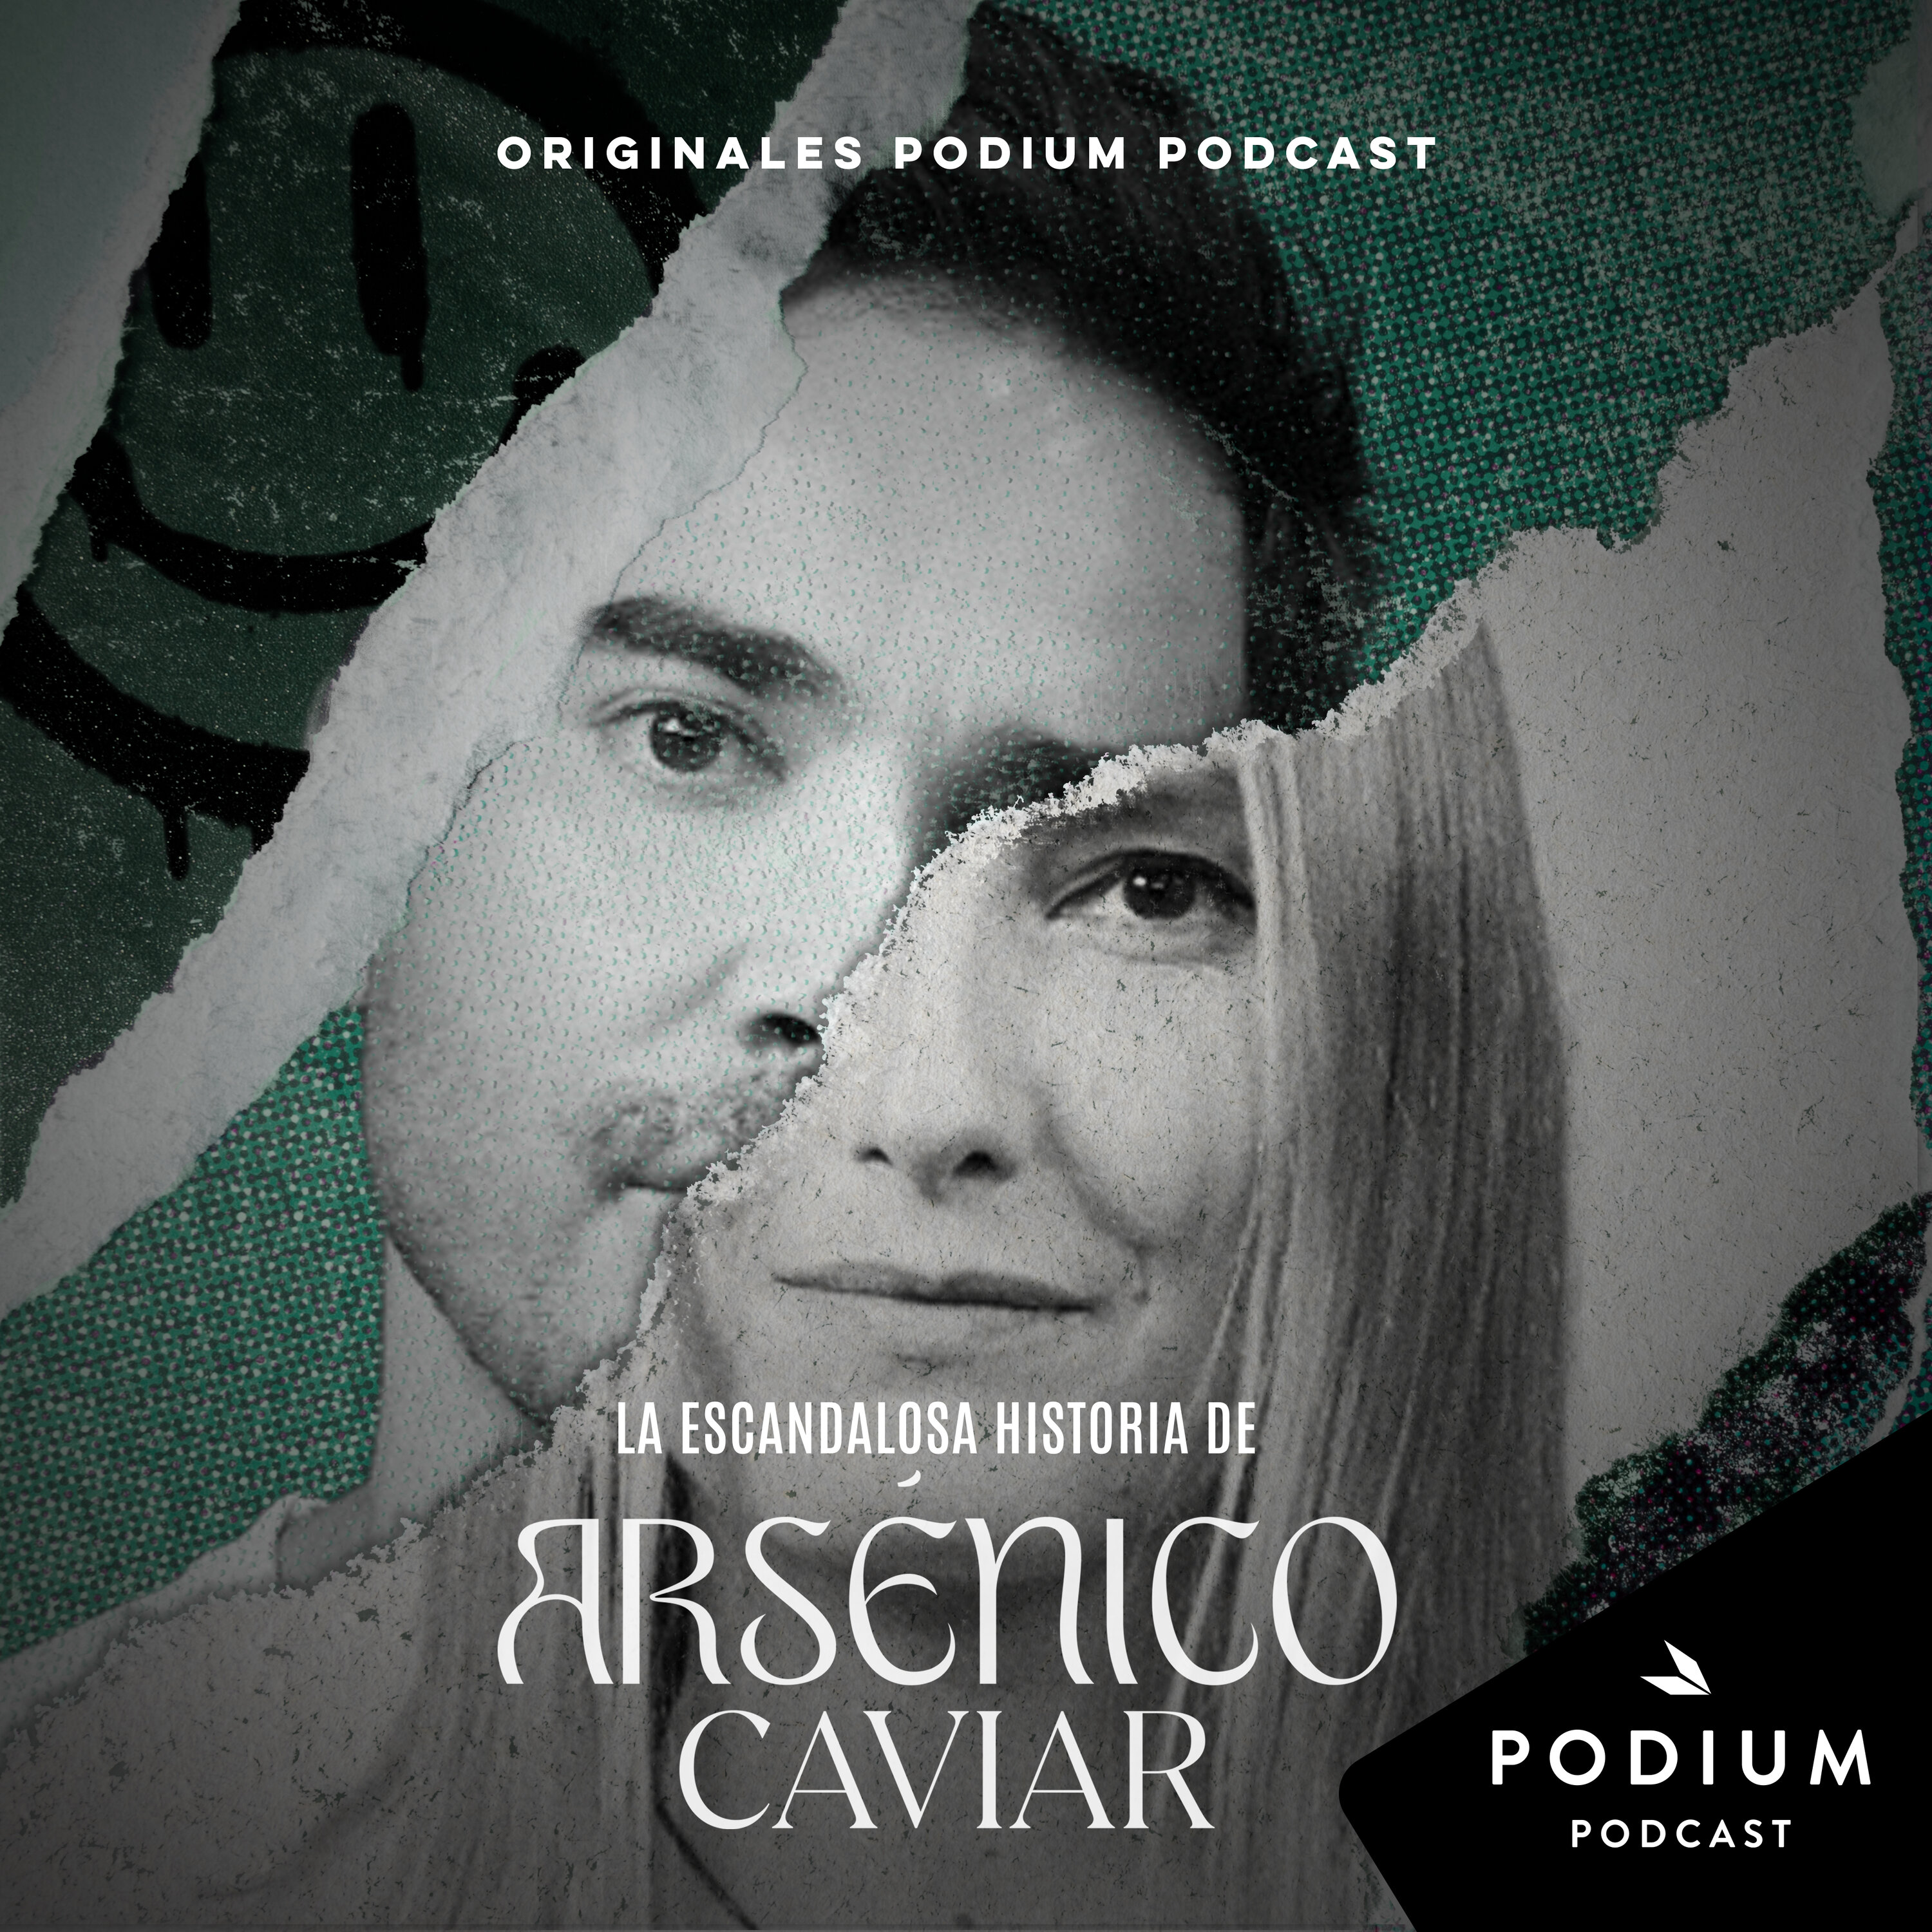 Episodio 39 - La escandalosa historia de Arsénico Caviar